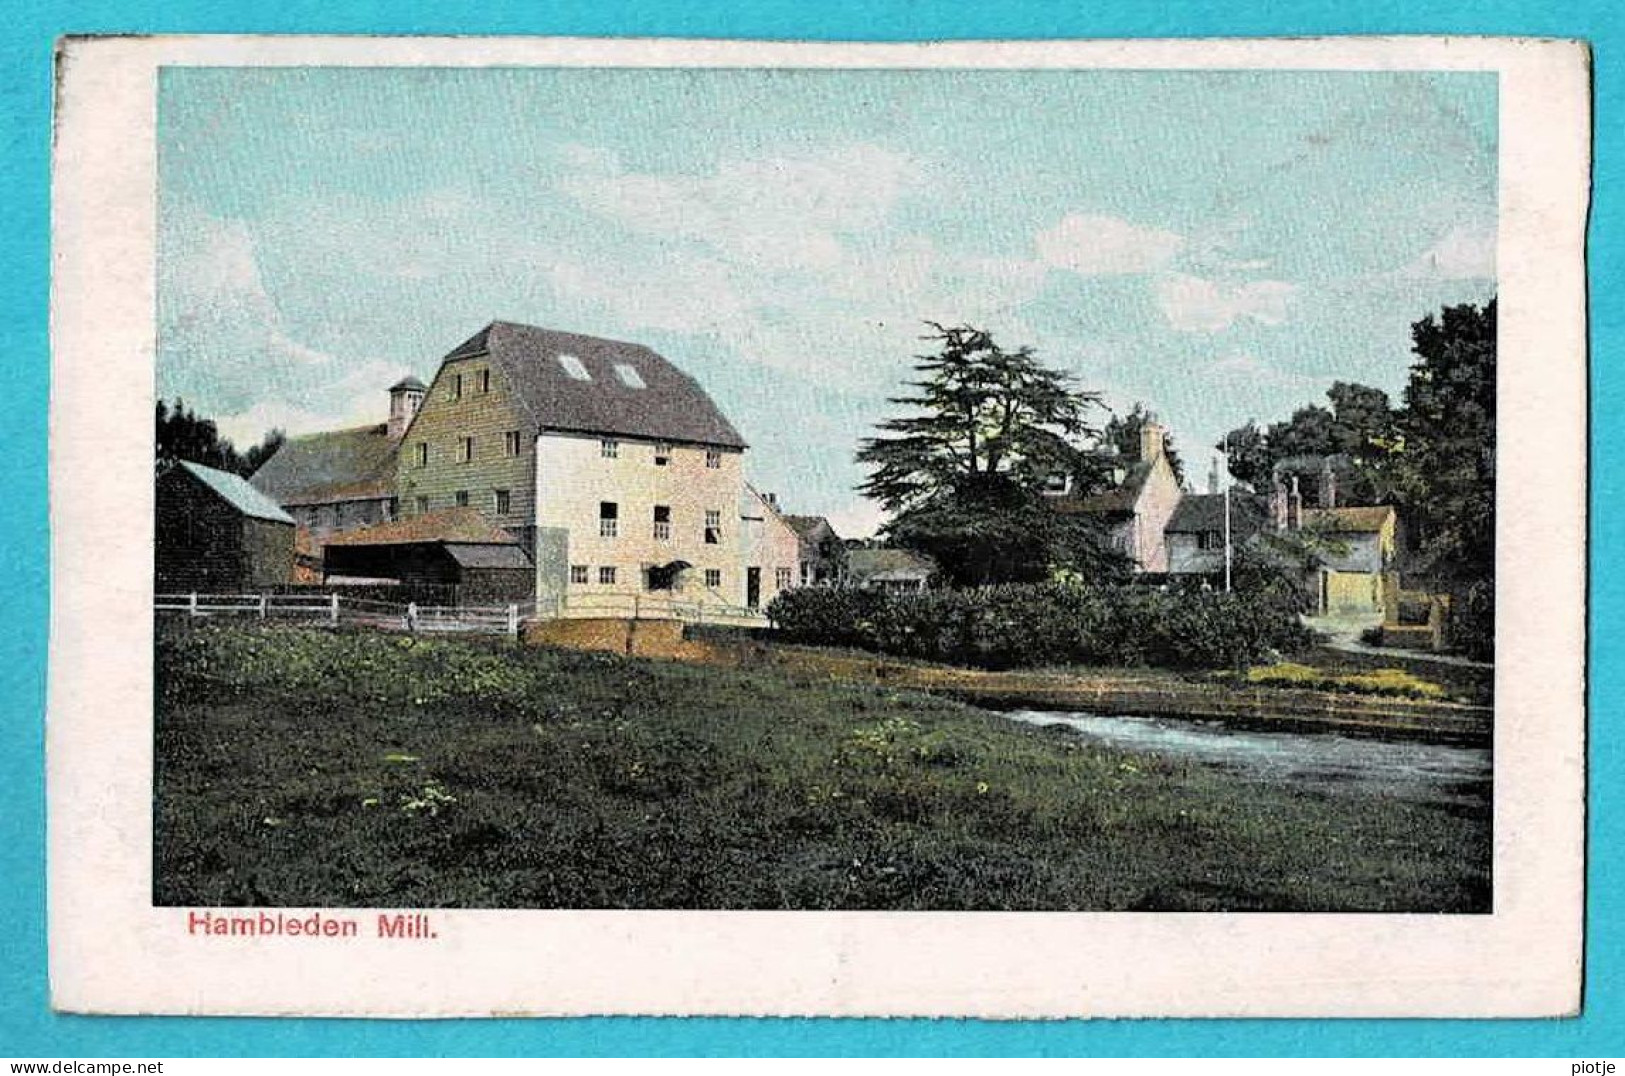 * Hambleden Mill - Wycombe - Buckinghamshire (United Kingdom - England) * Couleur, Colour, Moulin, Canal, Quai - Buckinghamshire